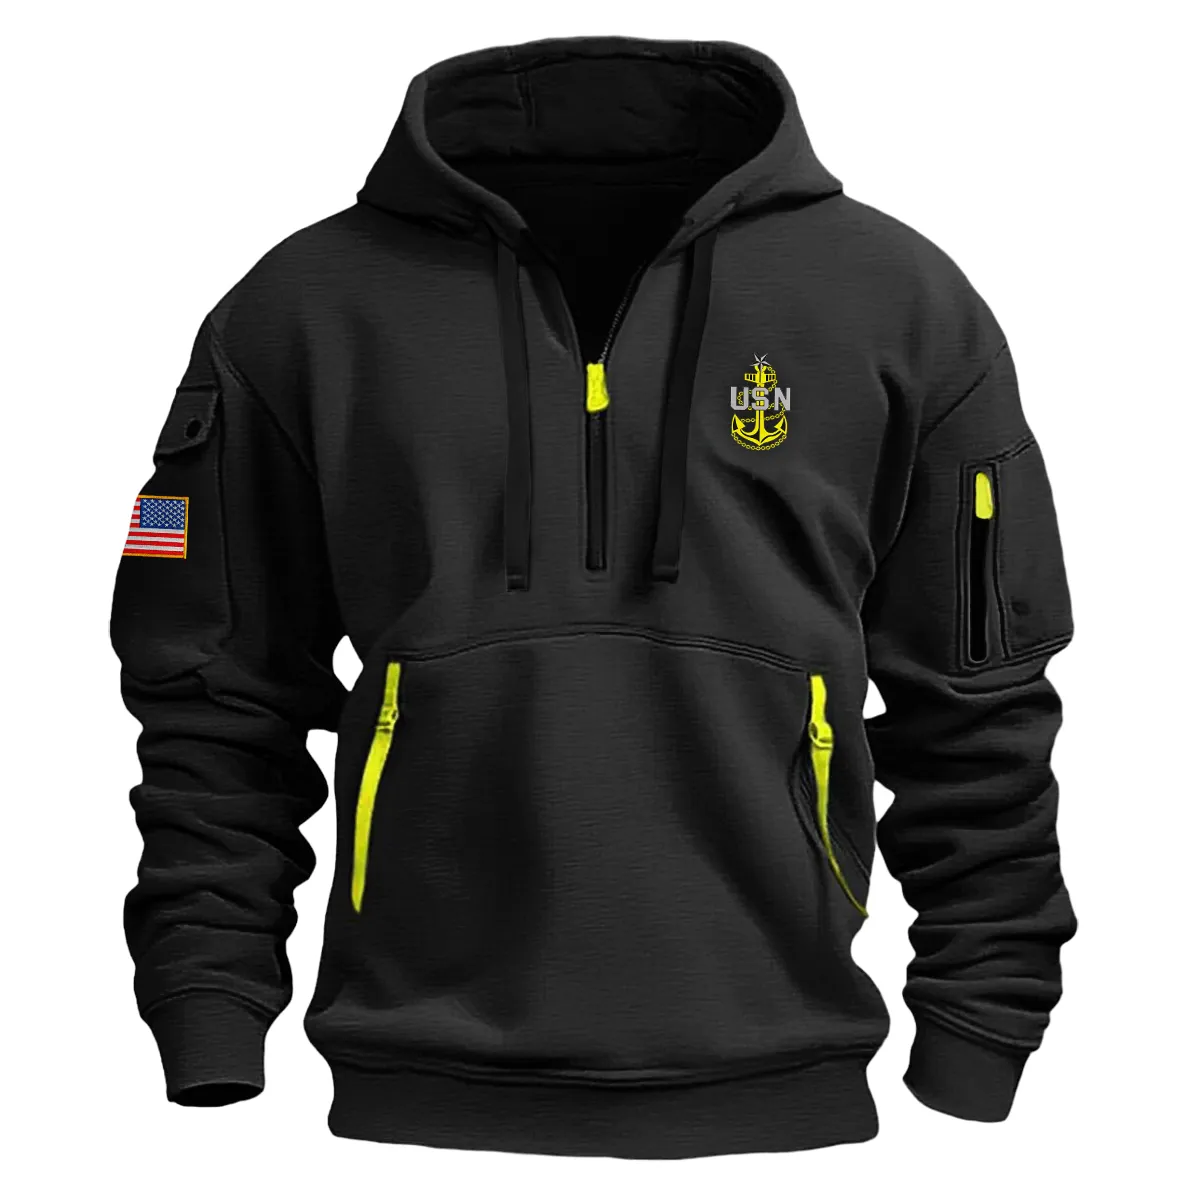 US Military All Branches SCPO U.S. Navy Fashion Hoodie Half Zipper